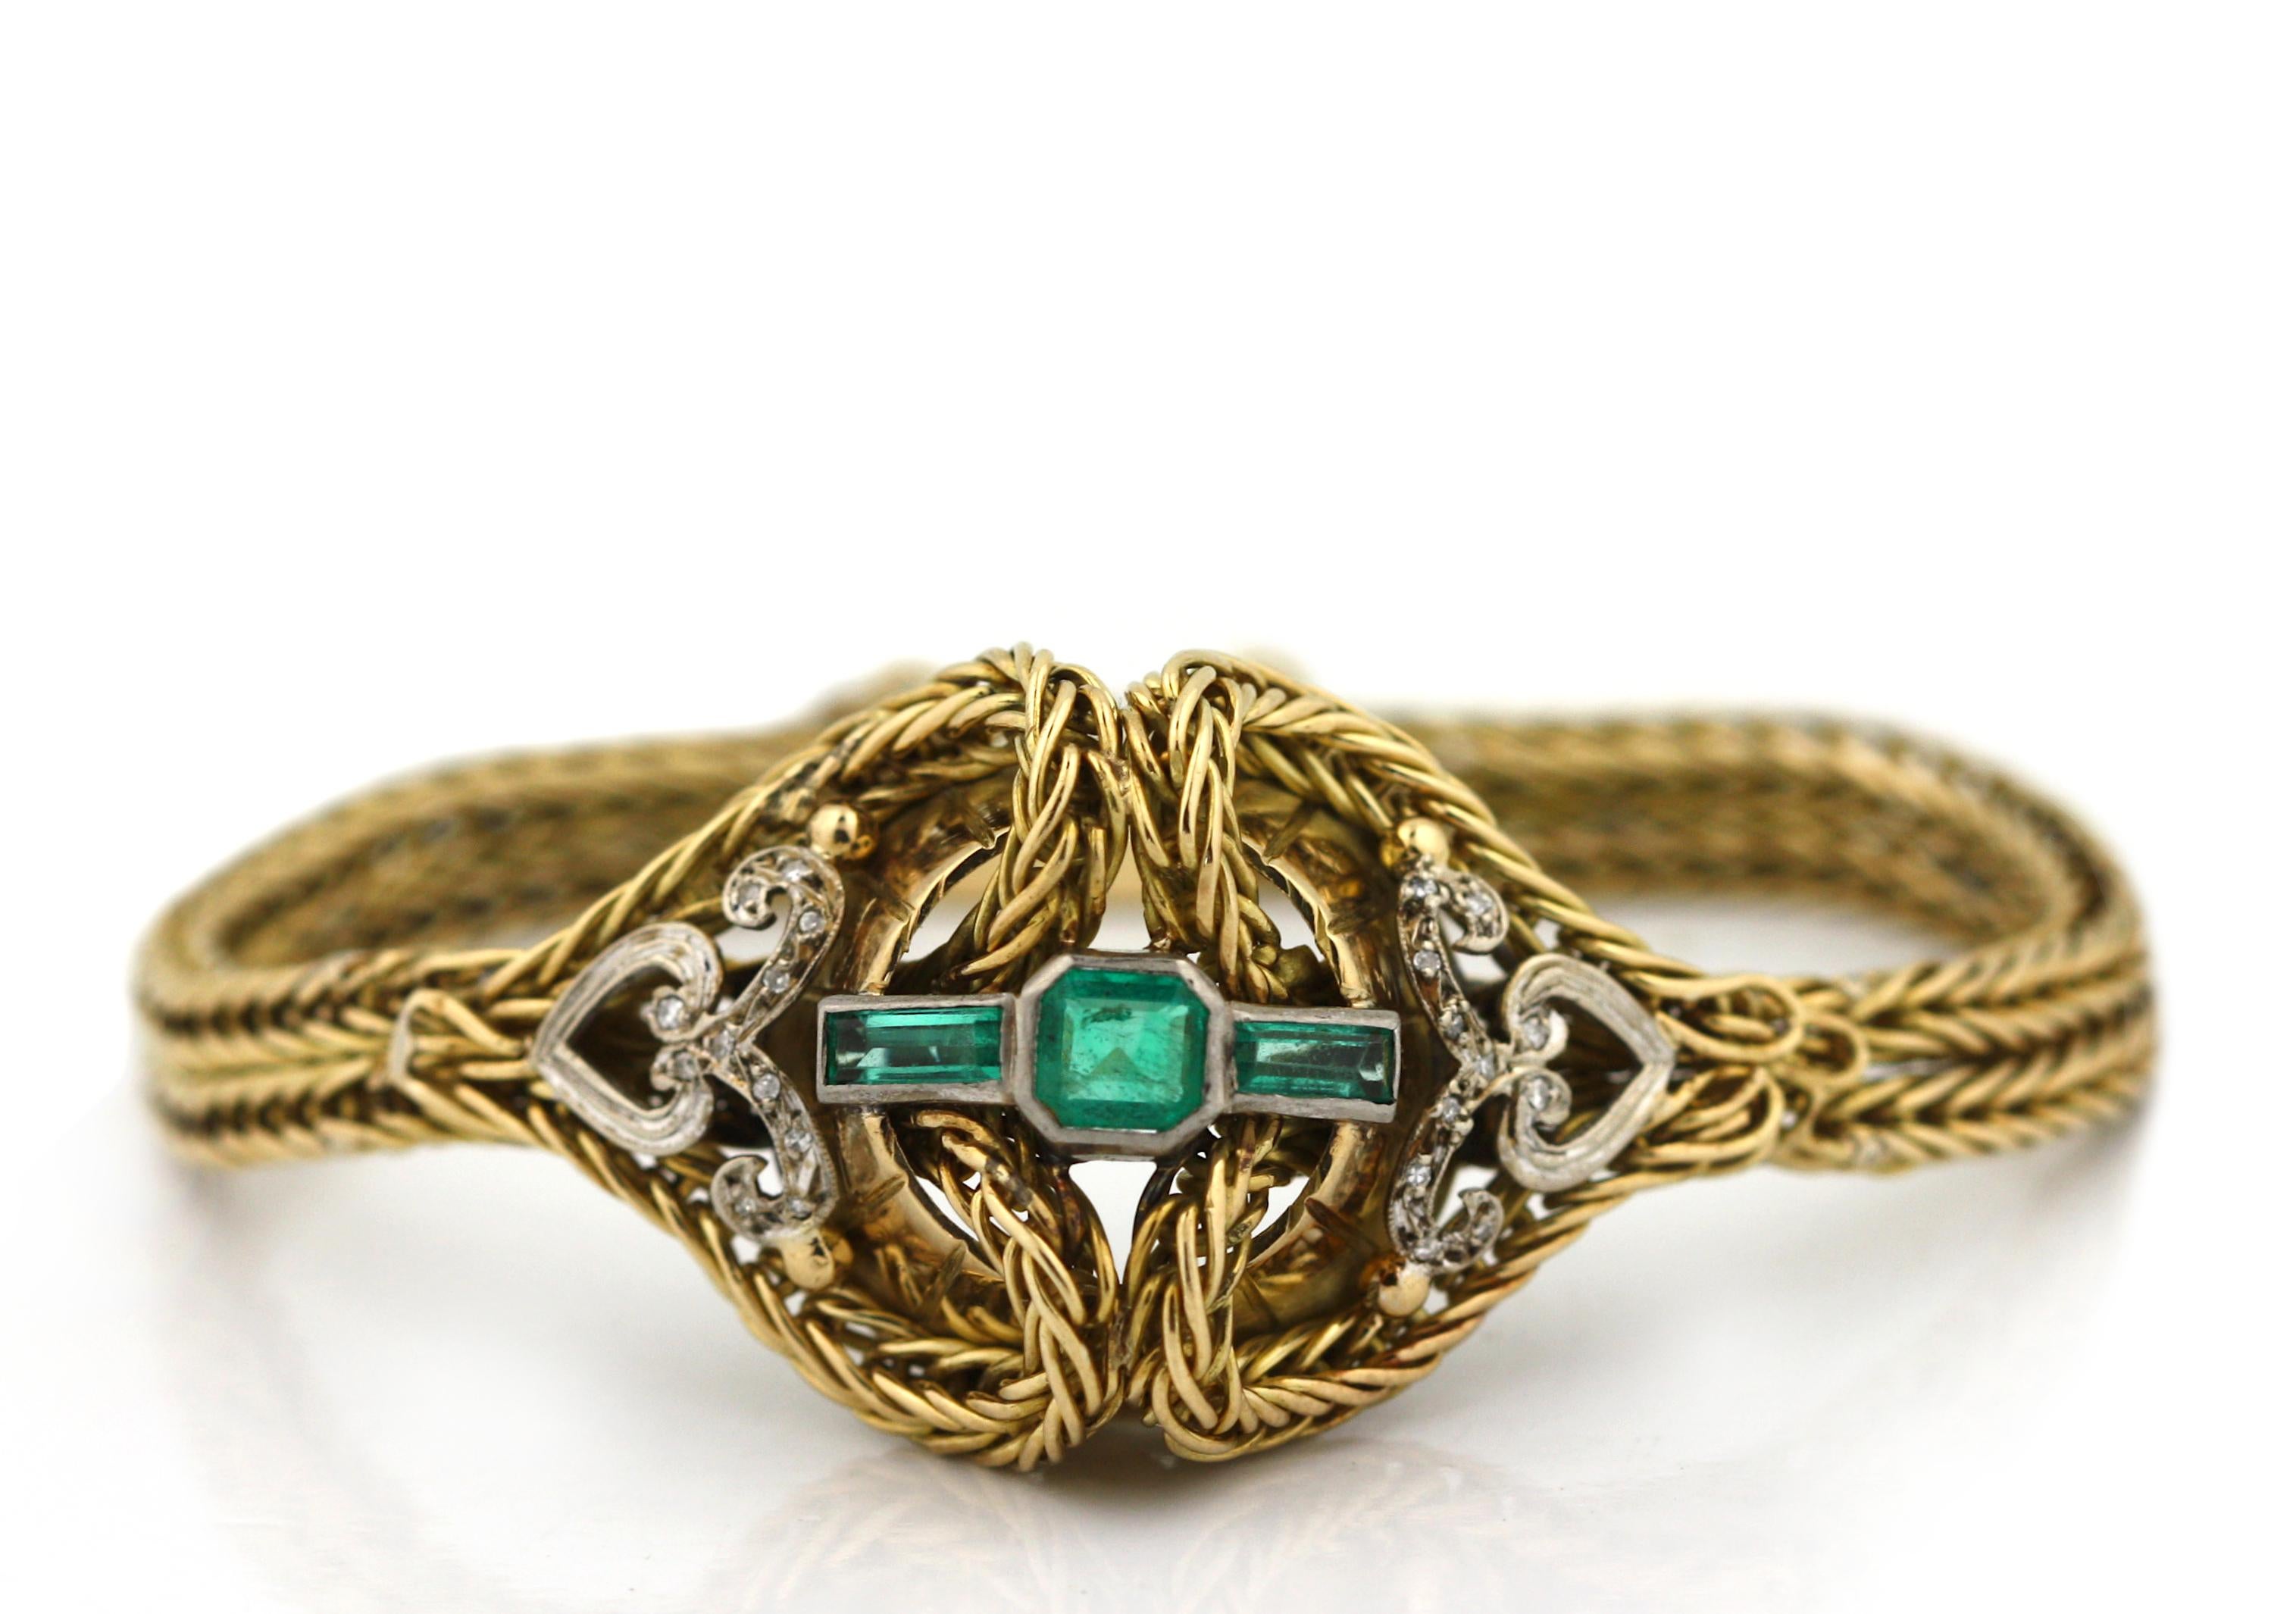  18 karat Gold, Colored Stone and Diamond Bracelet For Sale 2